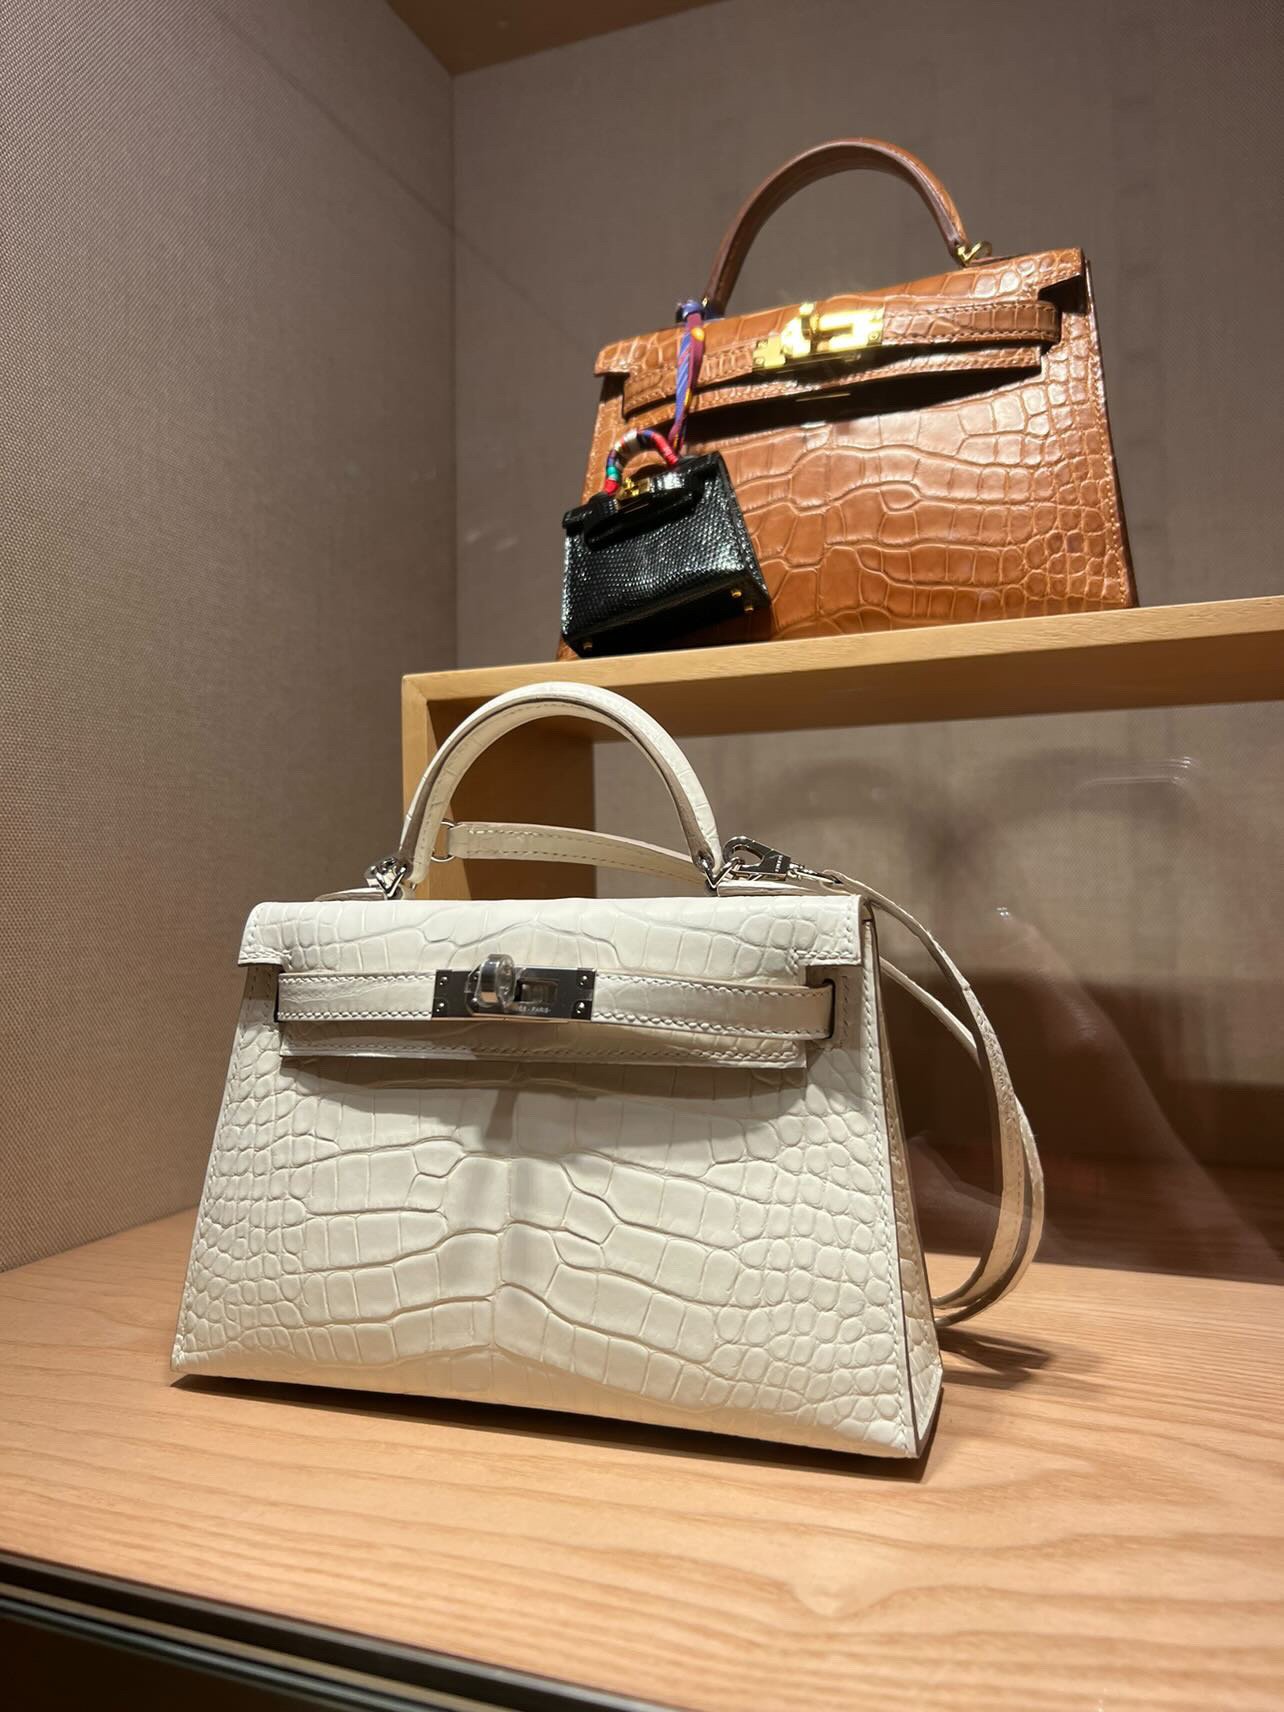 A Birkin luxury handbag sits in the window display of a Hermes